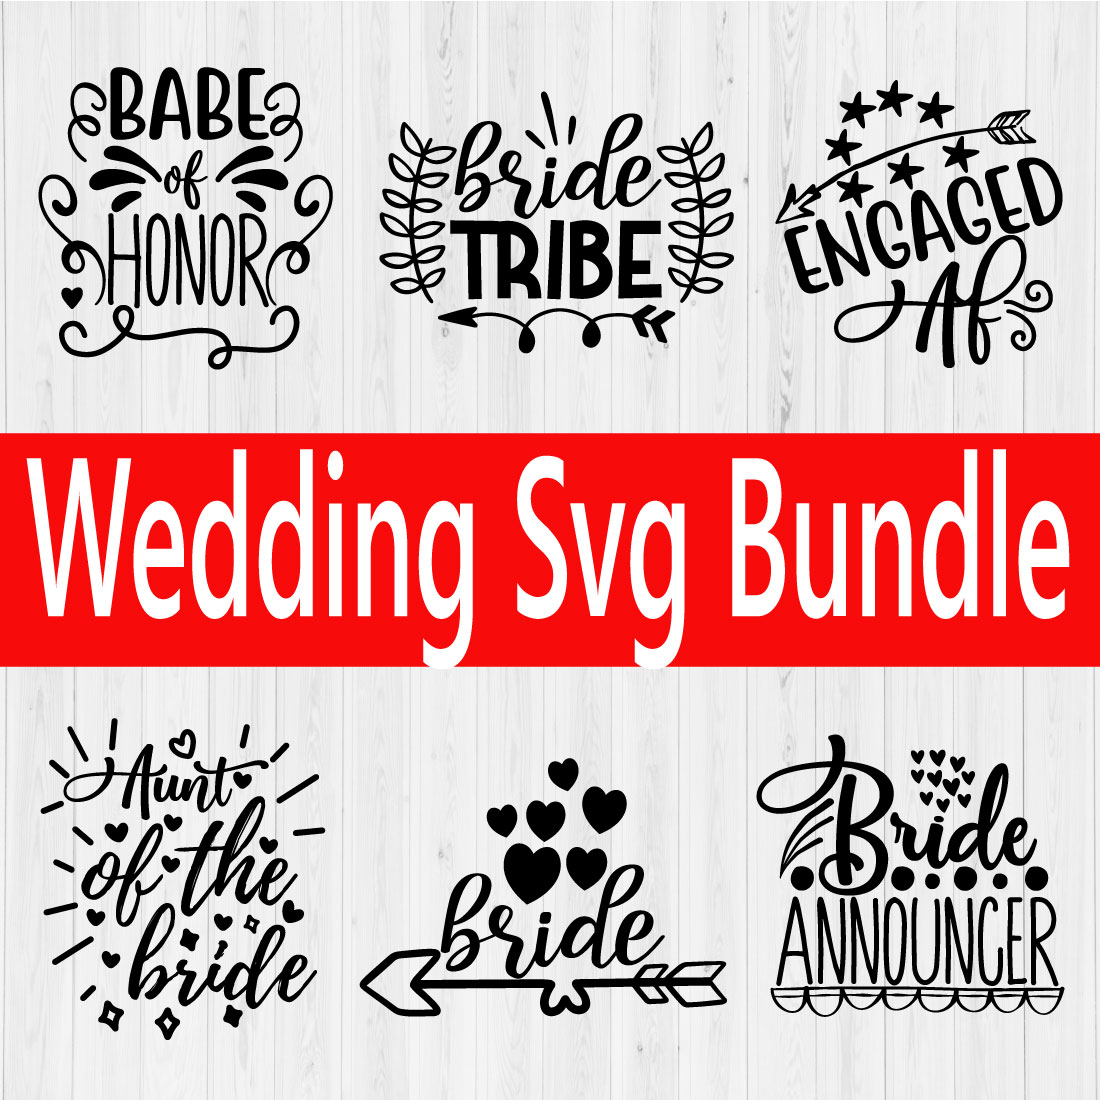 Wedding Svg Bundle Vol1 preview image.